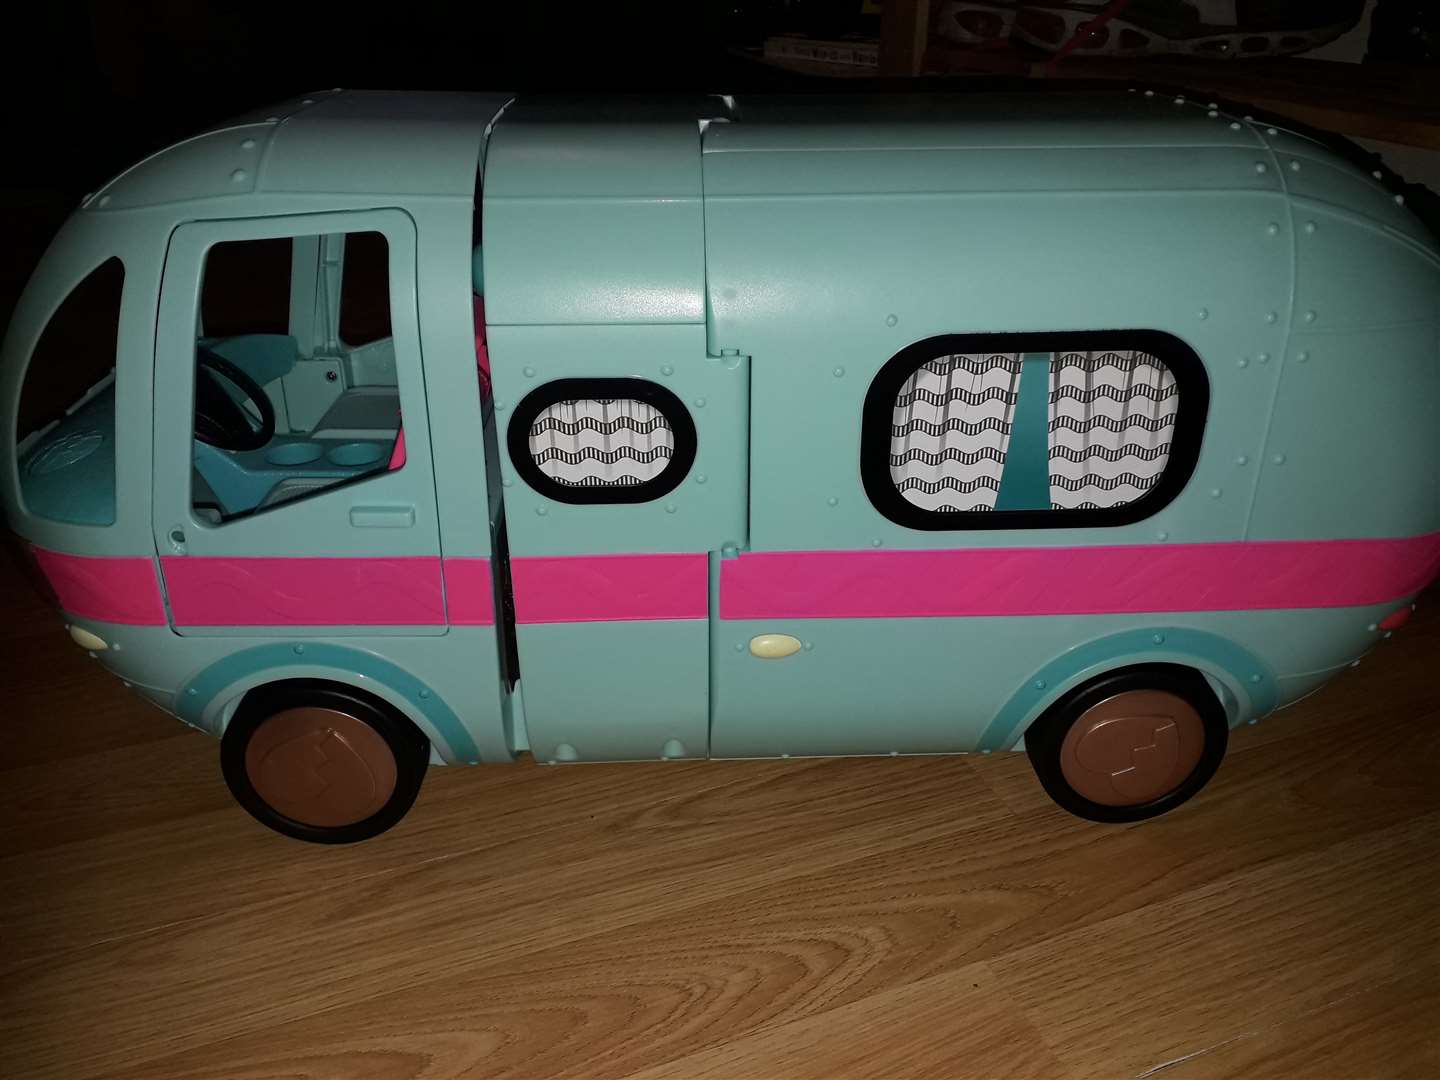 The LOL Surprise 2-in-1 Glamper Van was taken back by Castletown mum, Elizabeth Jones, after reports of children suffering finger injuries.